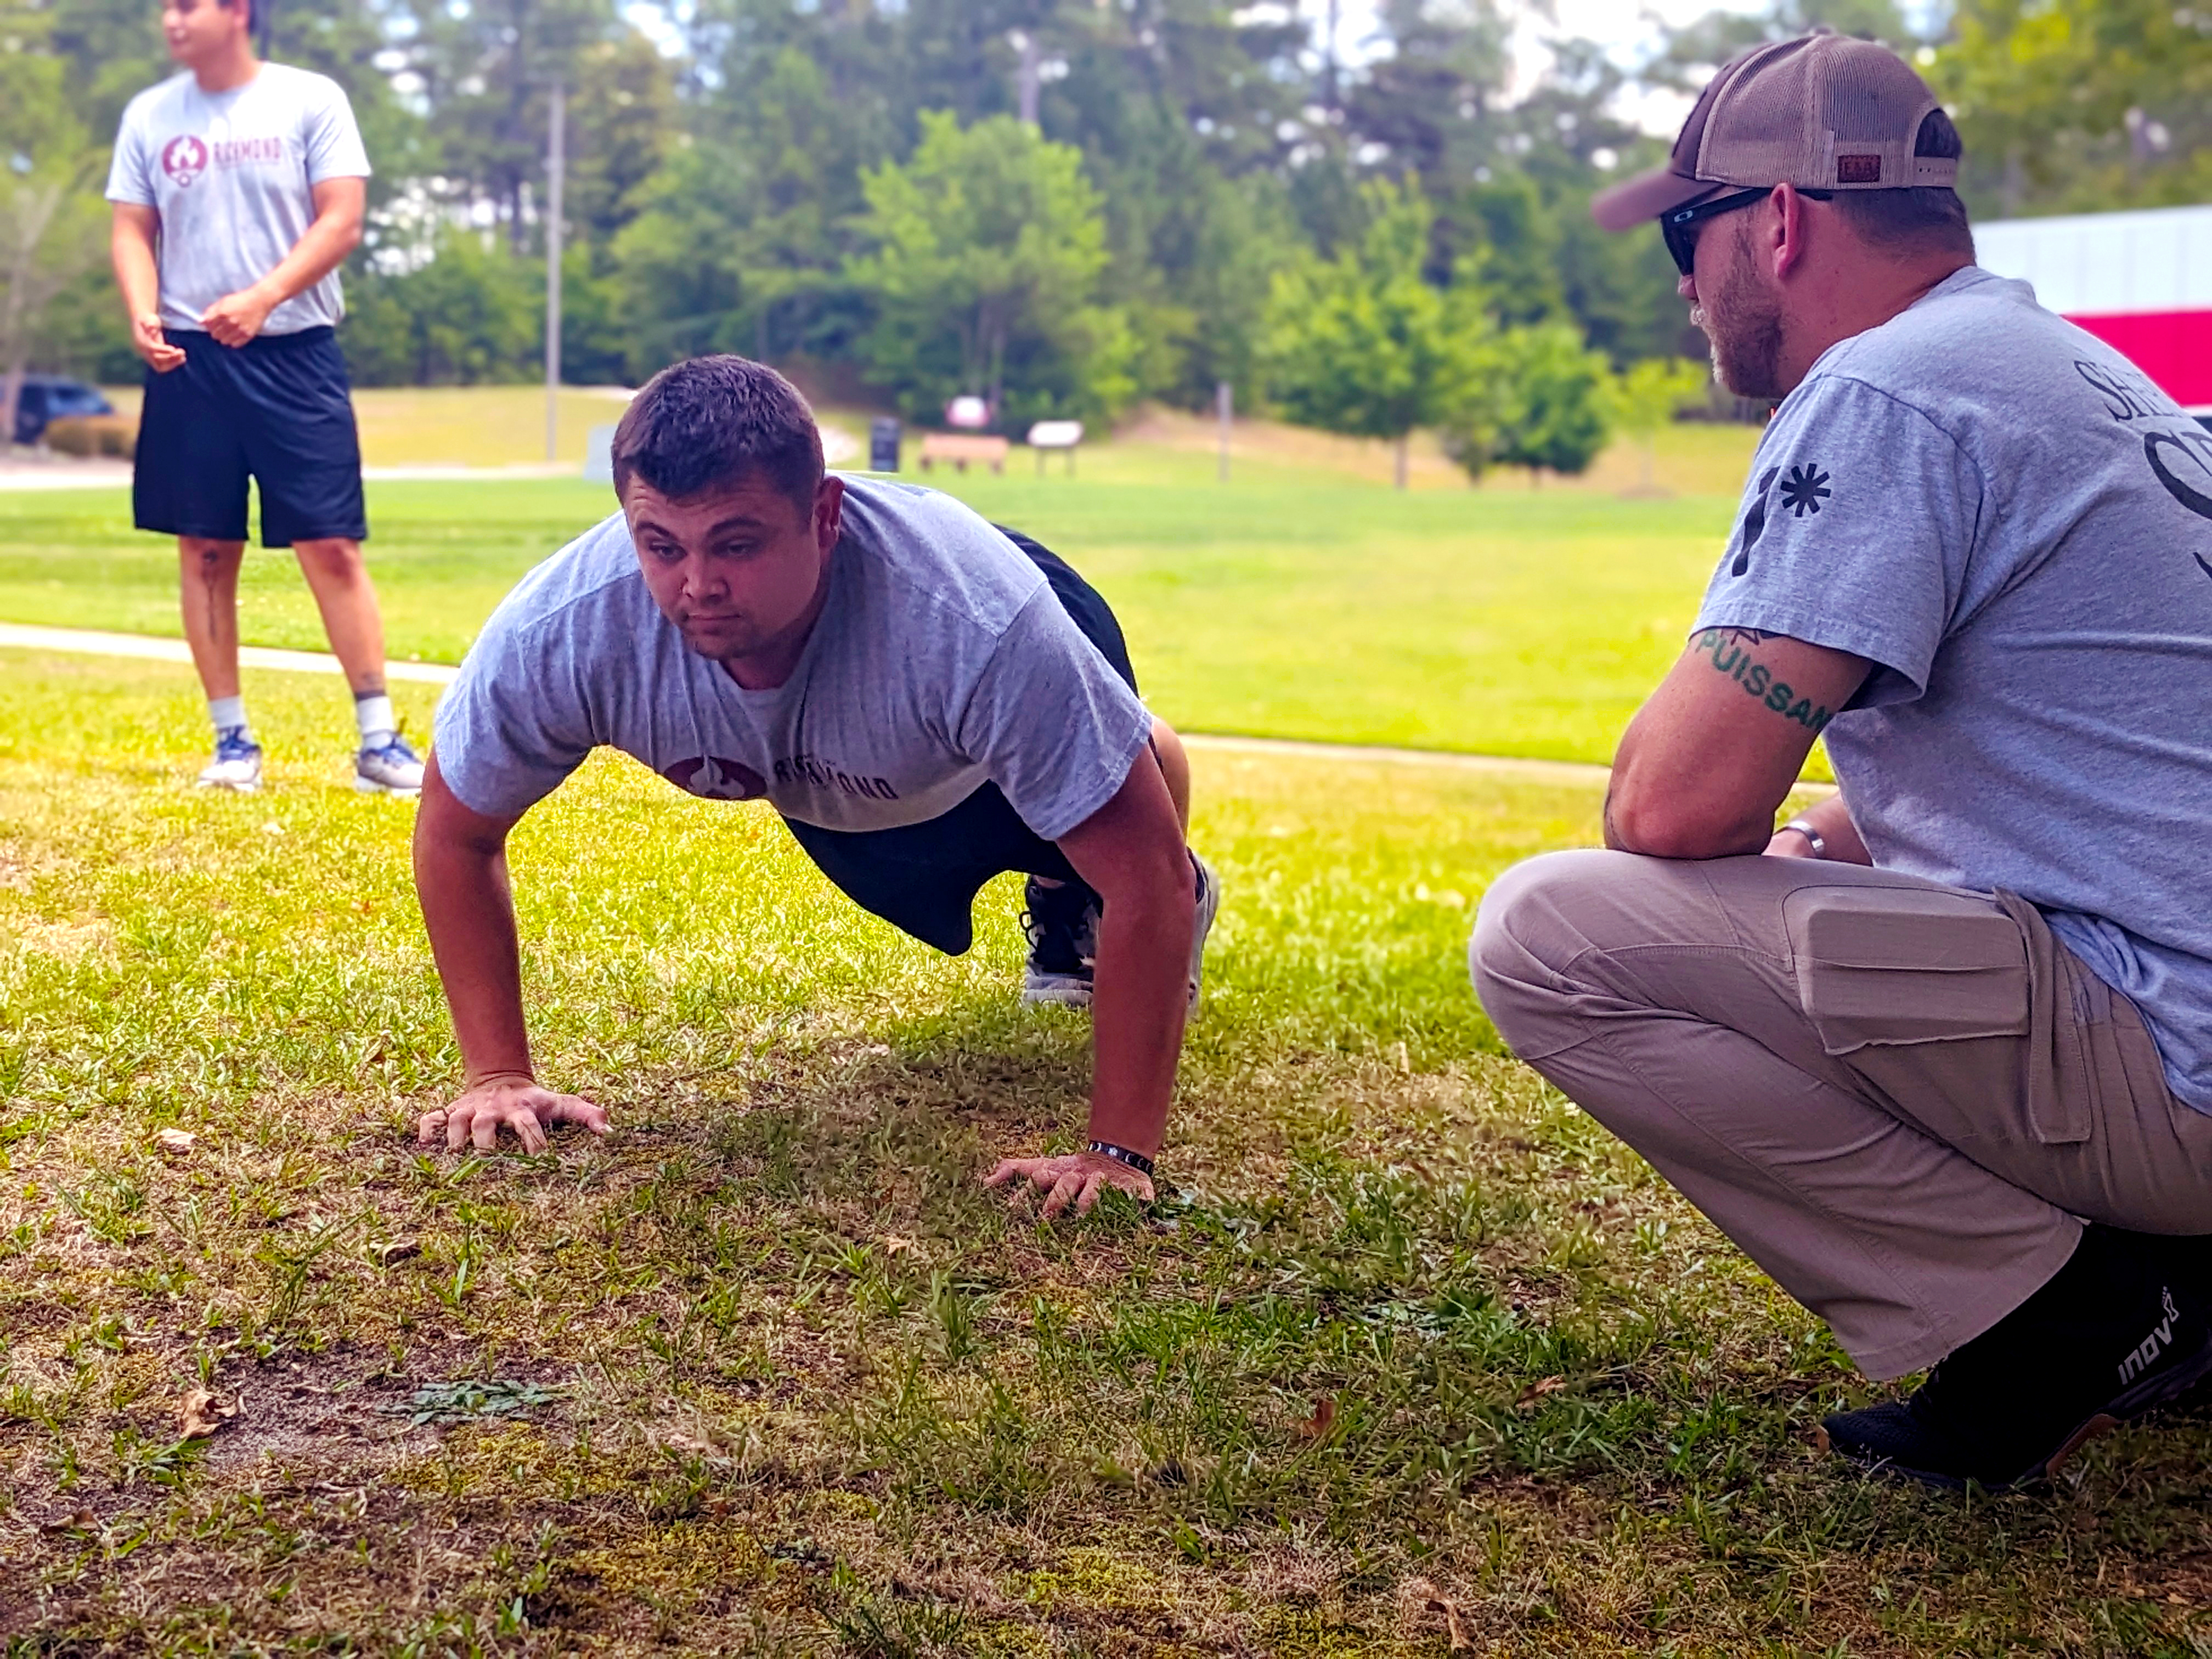 BLET instructor and cadet doing PT training